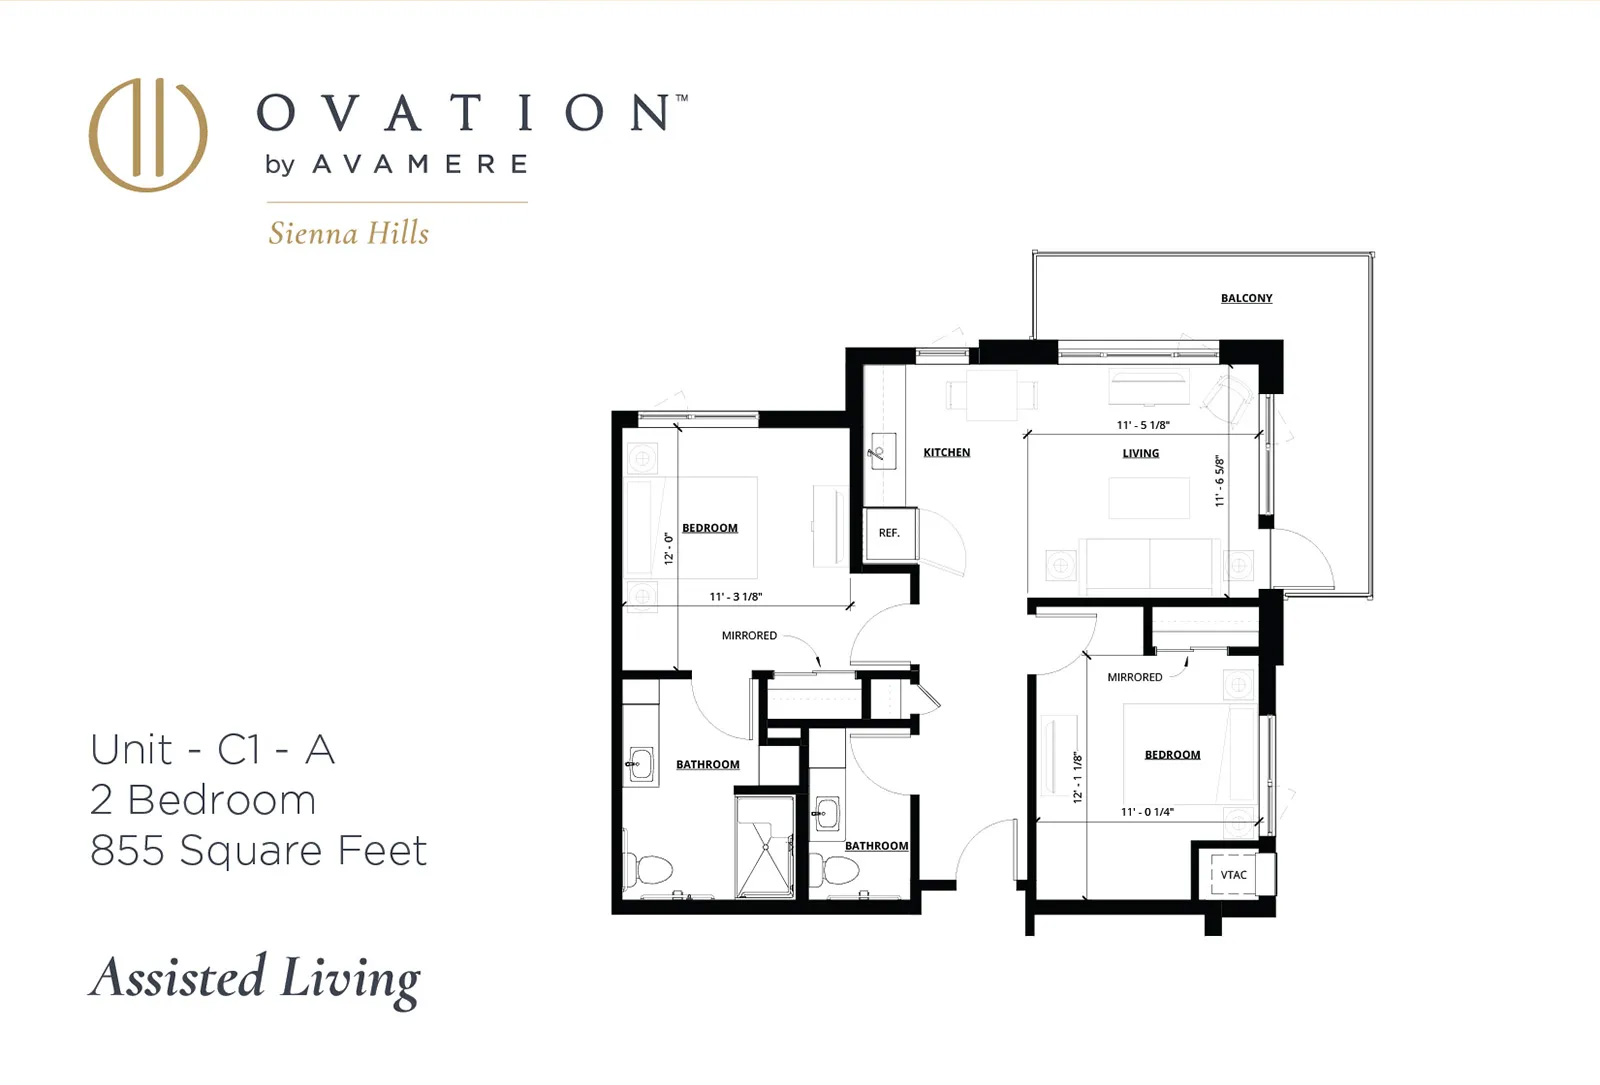 Ovation Sienna Hills 2 Bedroom Floorplan 855 sq ft